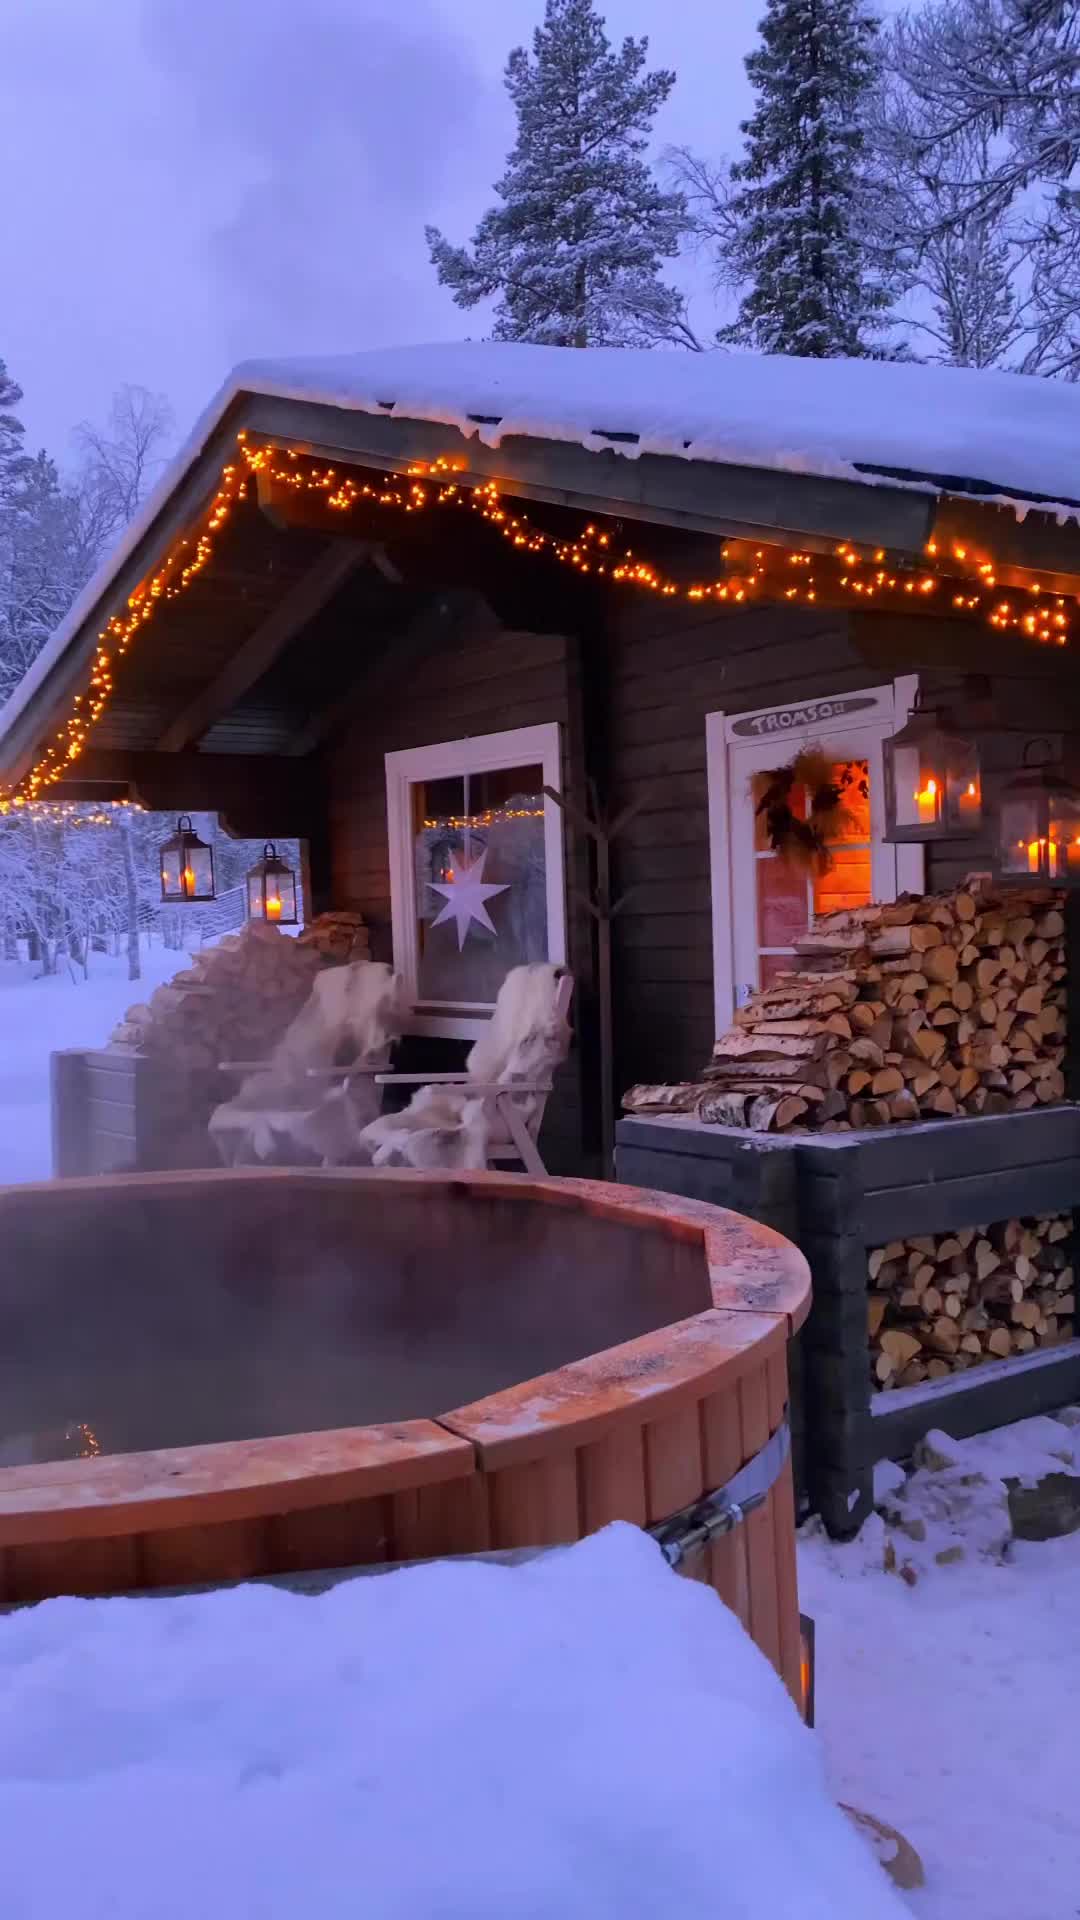 Explore Arctic Finnish Lapland at Foxfires Guesthouse